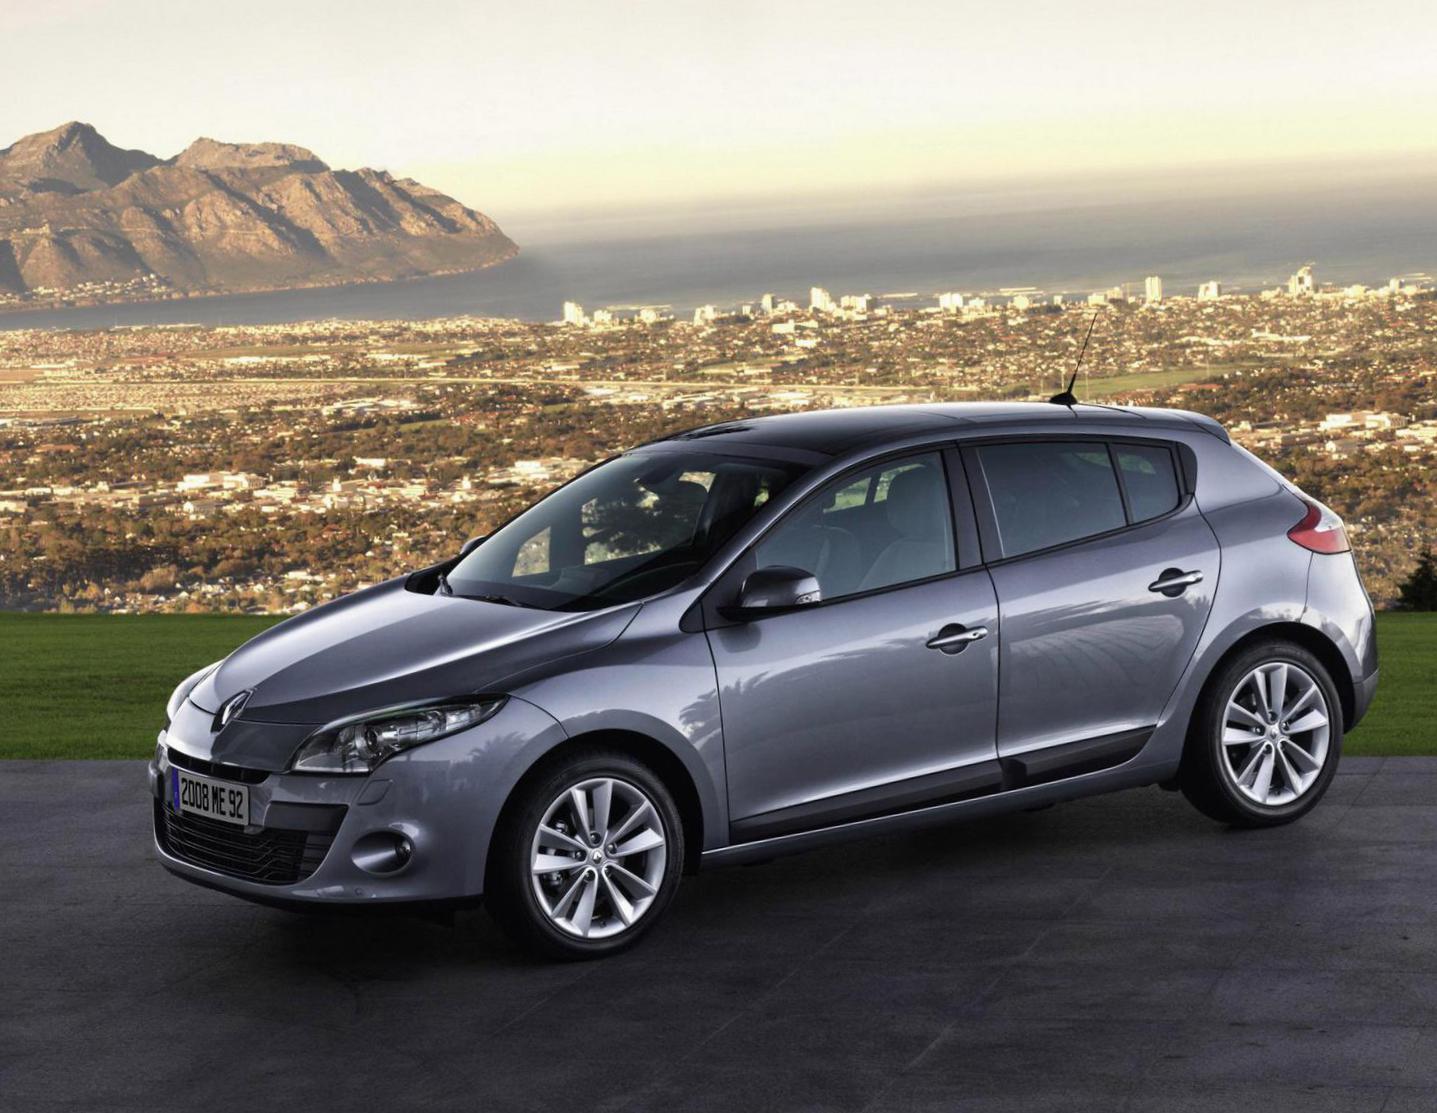 Renault Laguna Hatchback prices liftback